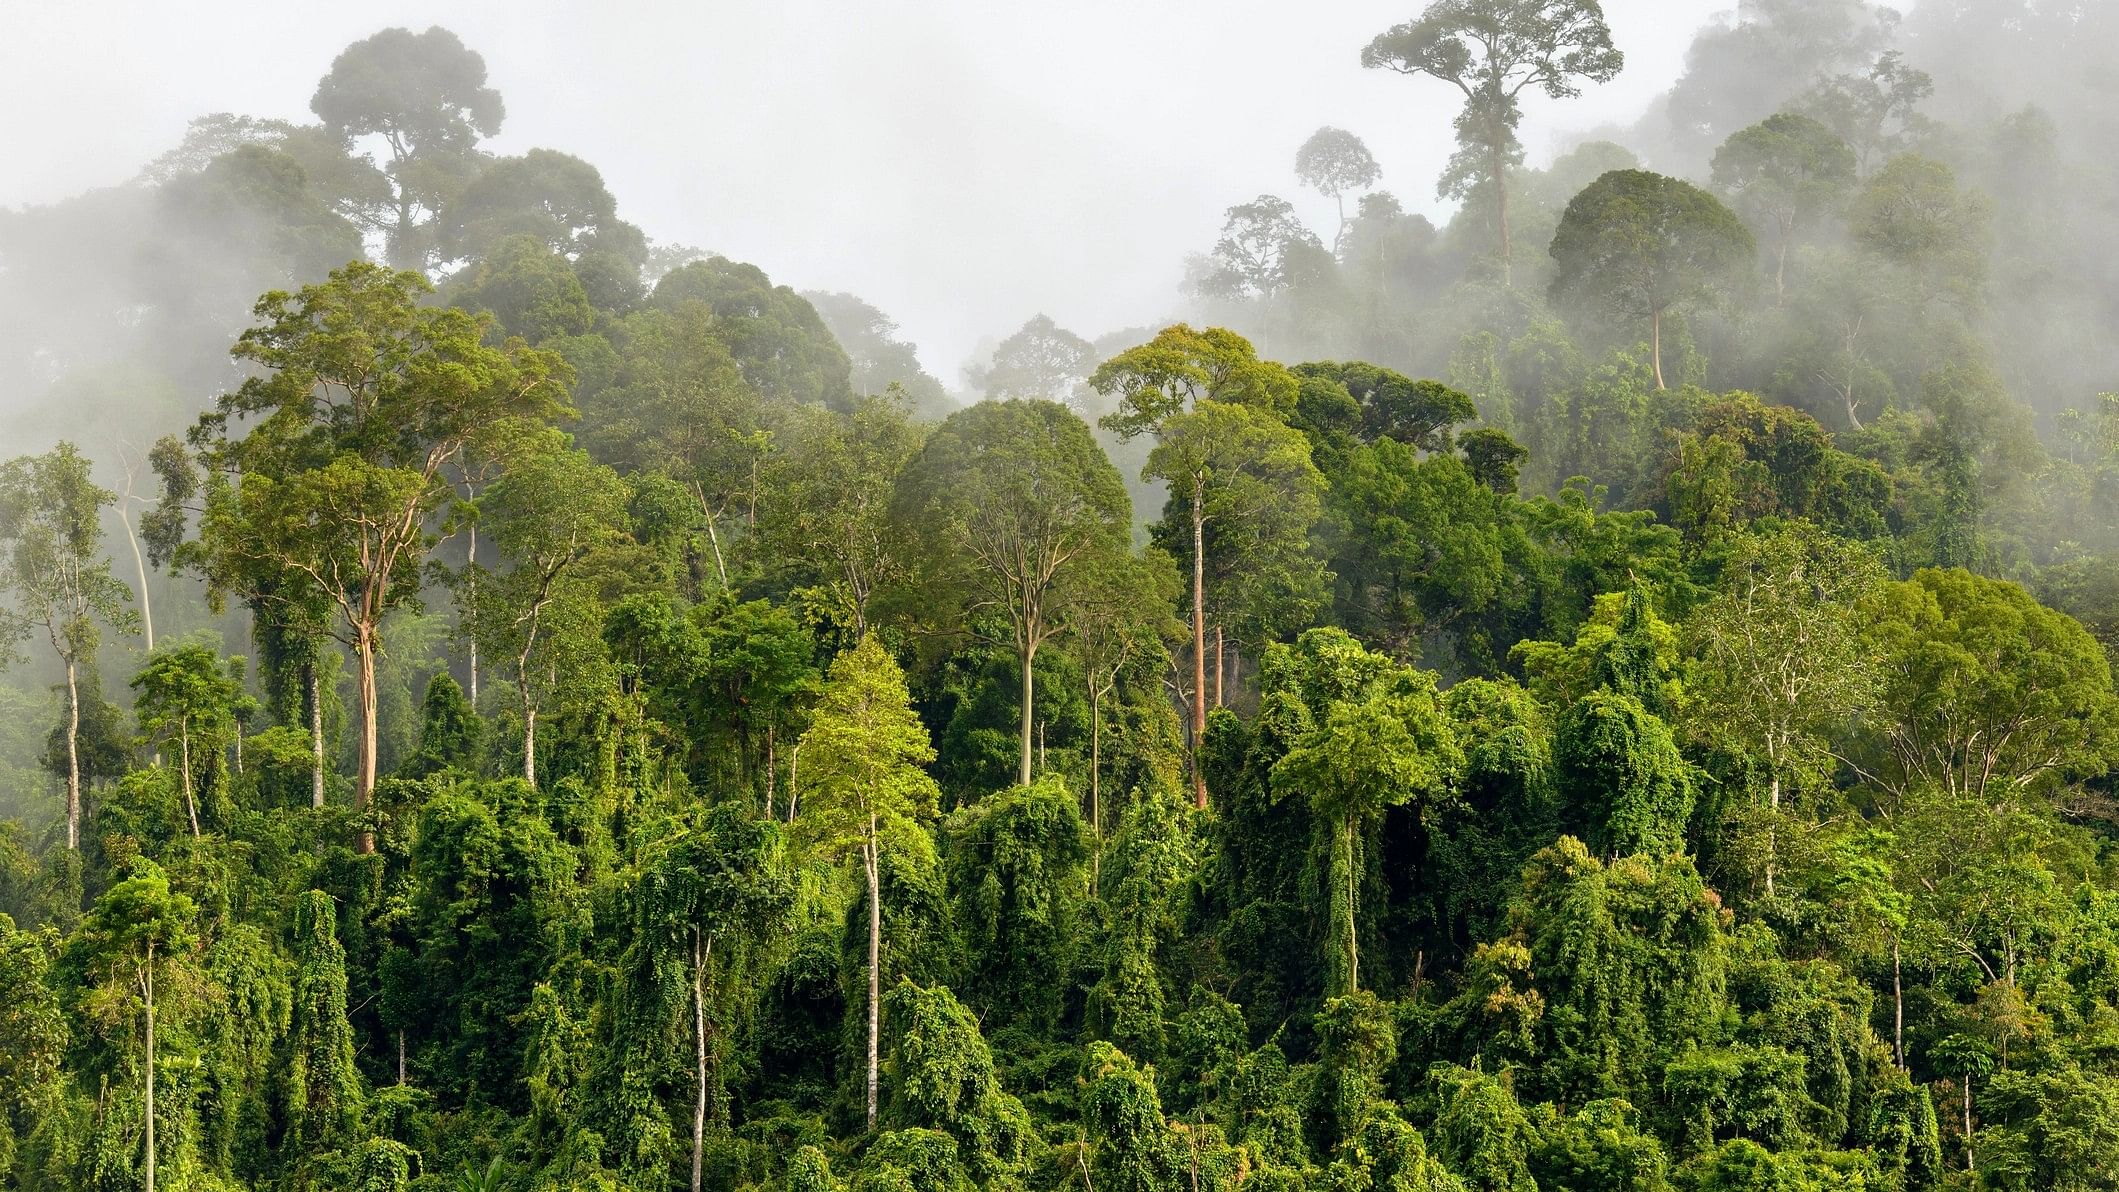 <div class="paragraphs"><p>Representative image showing dense tropical forests located near Malaysia</p></div>